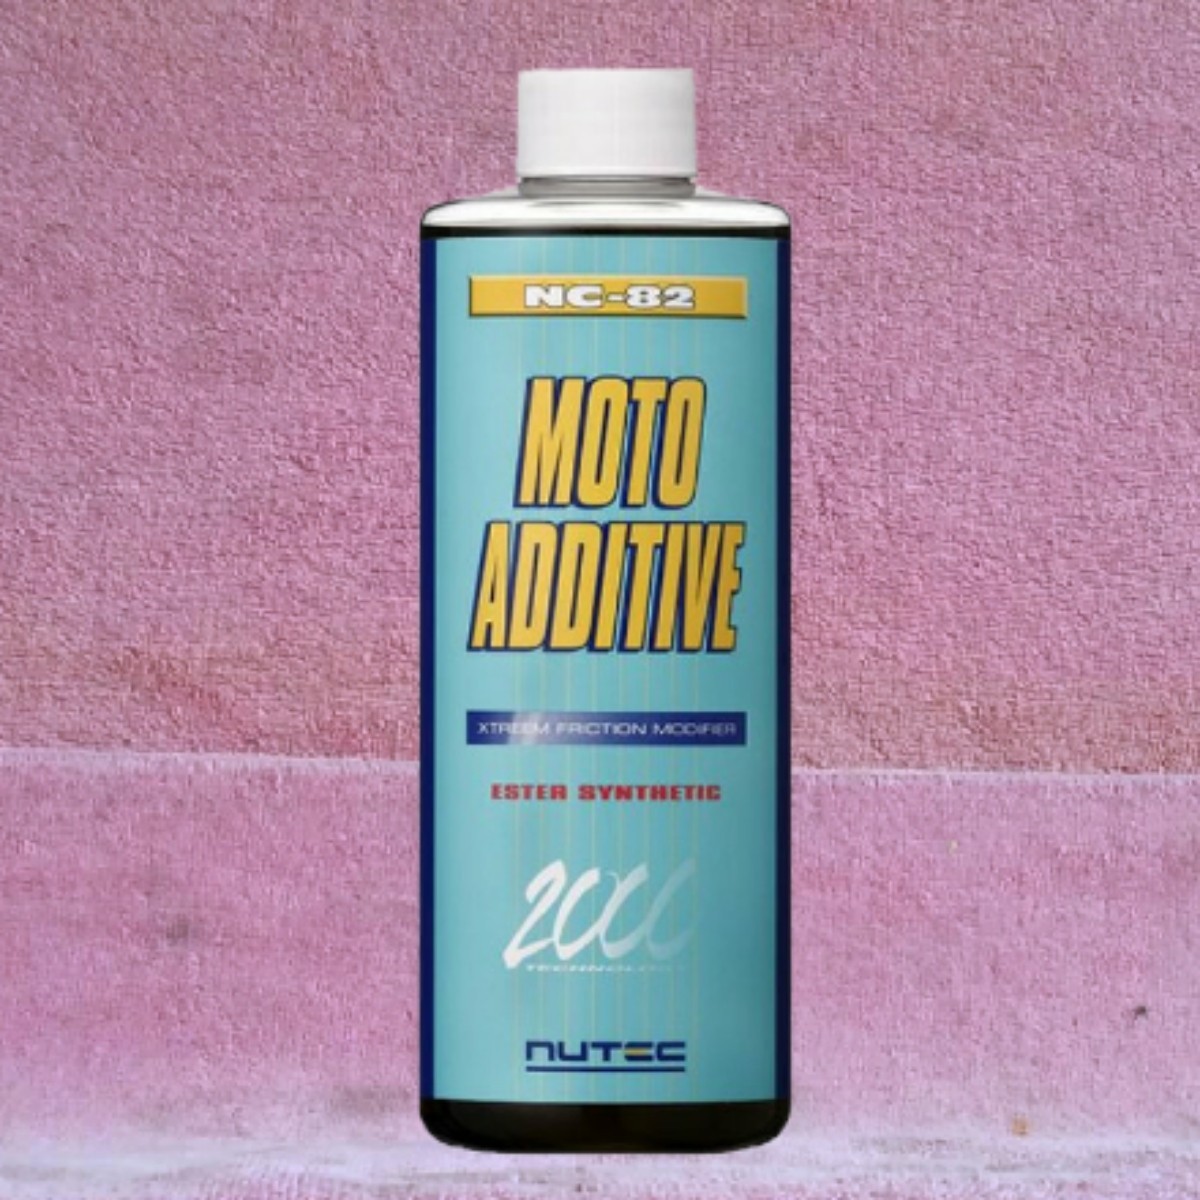 NUTEC NC-82 MOTO ADDITIVE「 NUTEC の高性能を手軽に体感できるエンジンオイル添加剤」300 ml